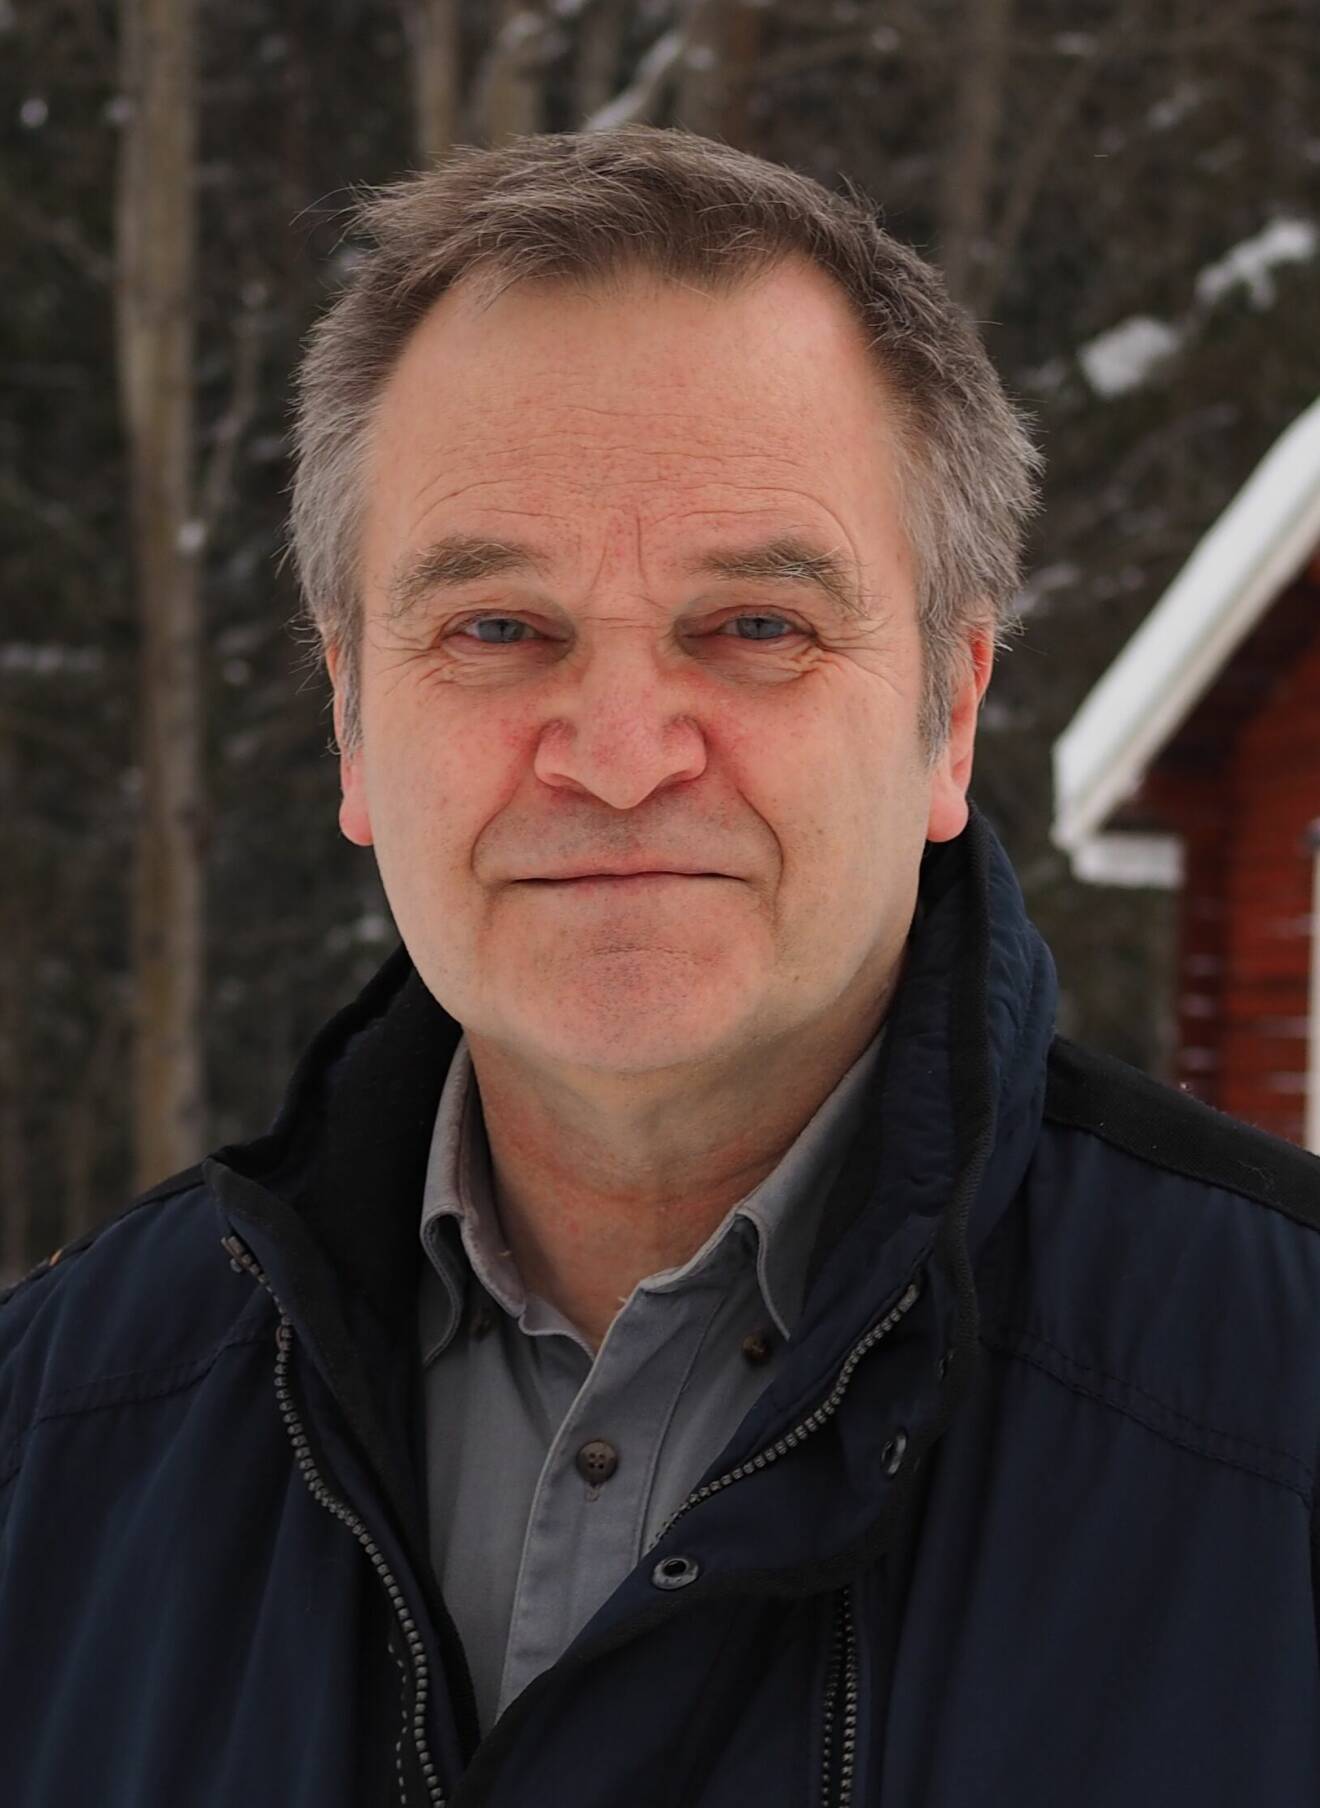 Olafur Jakobsson